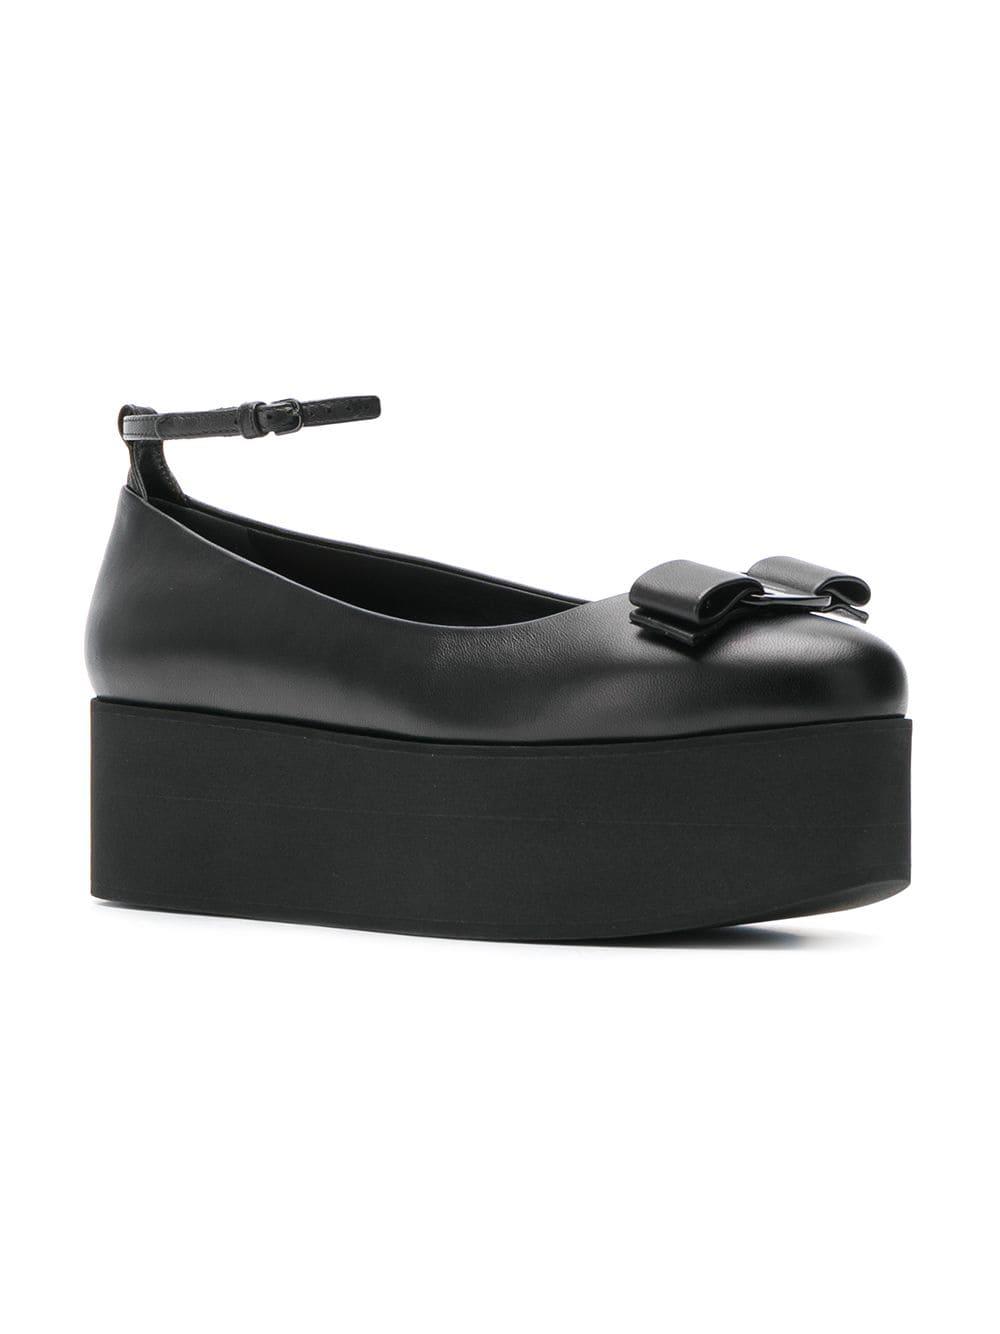 Ferragamo Platform Appliqué Ballerina Shoes in Black | Lyst